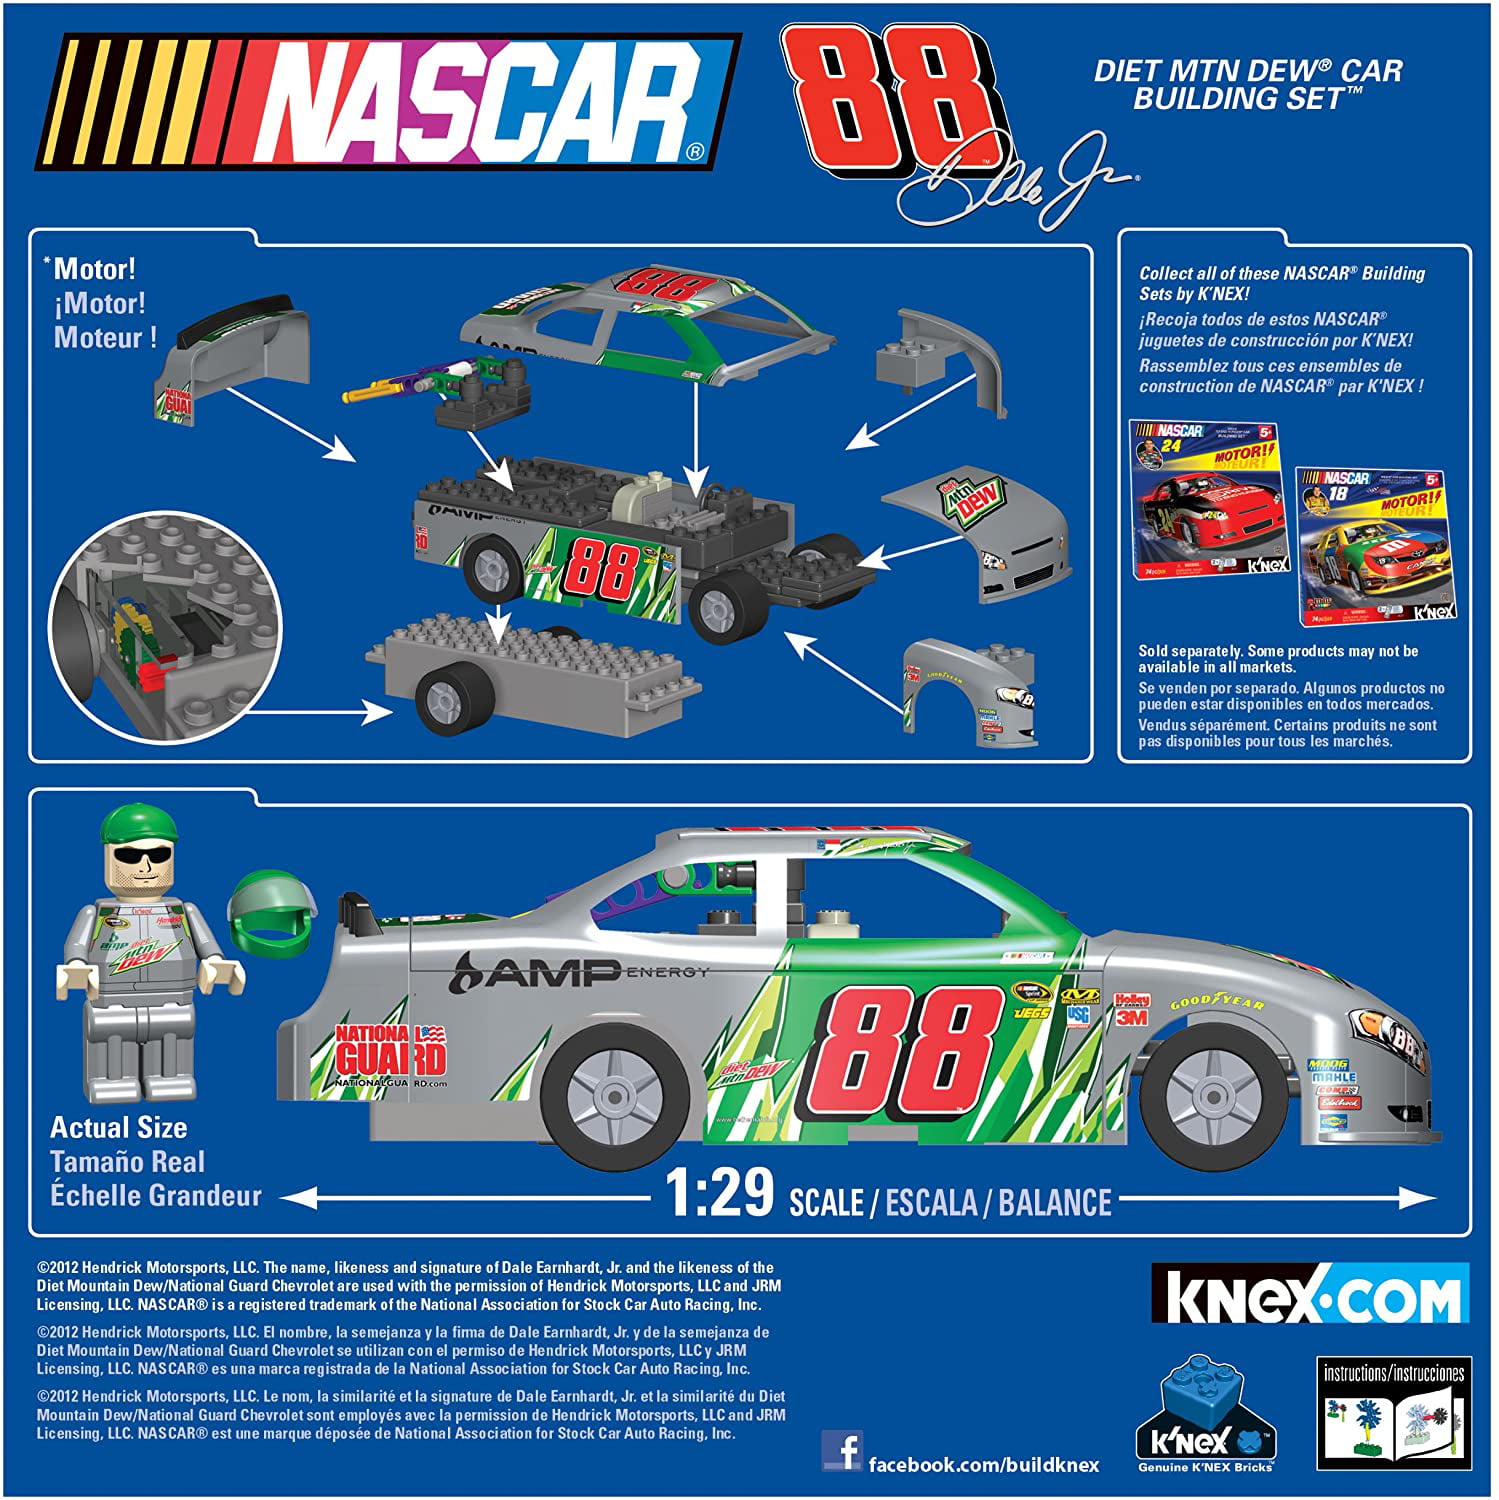 NASCAR CAR WINDOW DECAL STICKER TRUCK LAPTOP JEEP 5"X3.5" 88 DALE JR